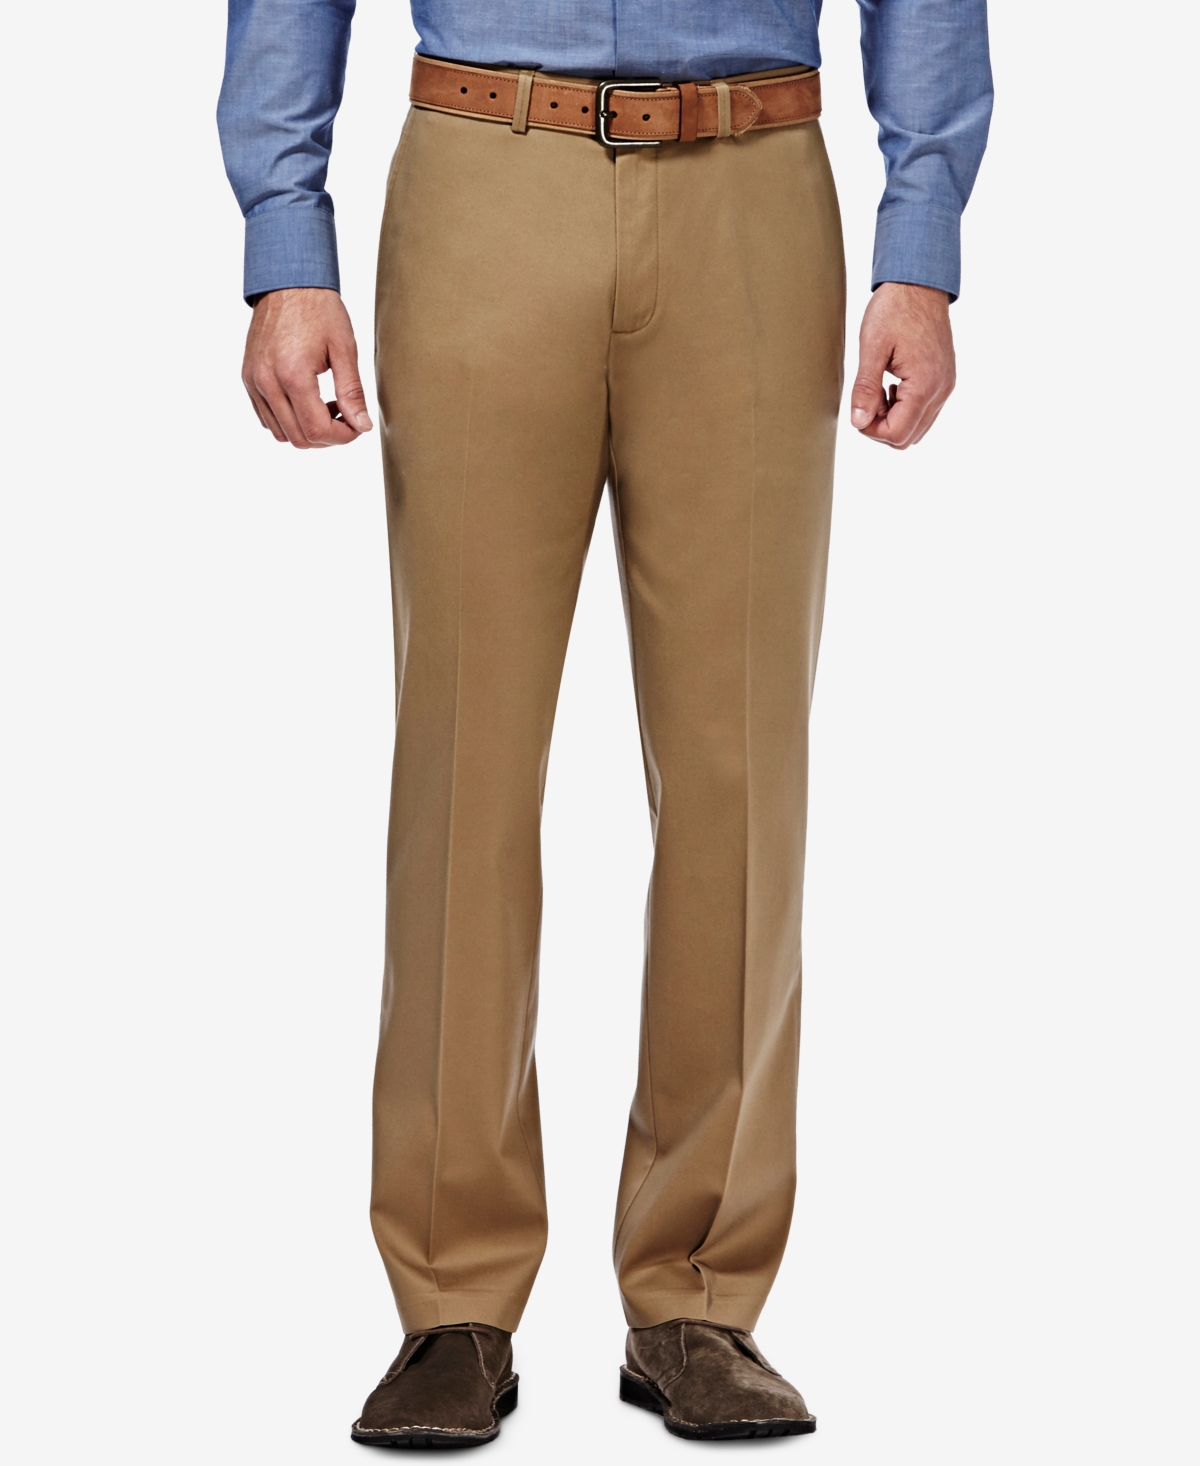 Men's Premium No Iron Khaki Straight-Fit Stretch Flat-Front Pants - Khaki